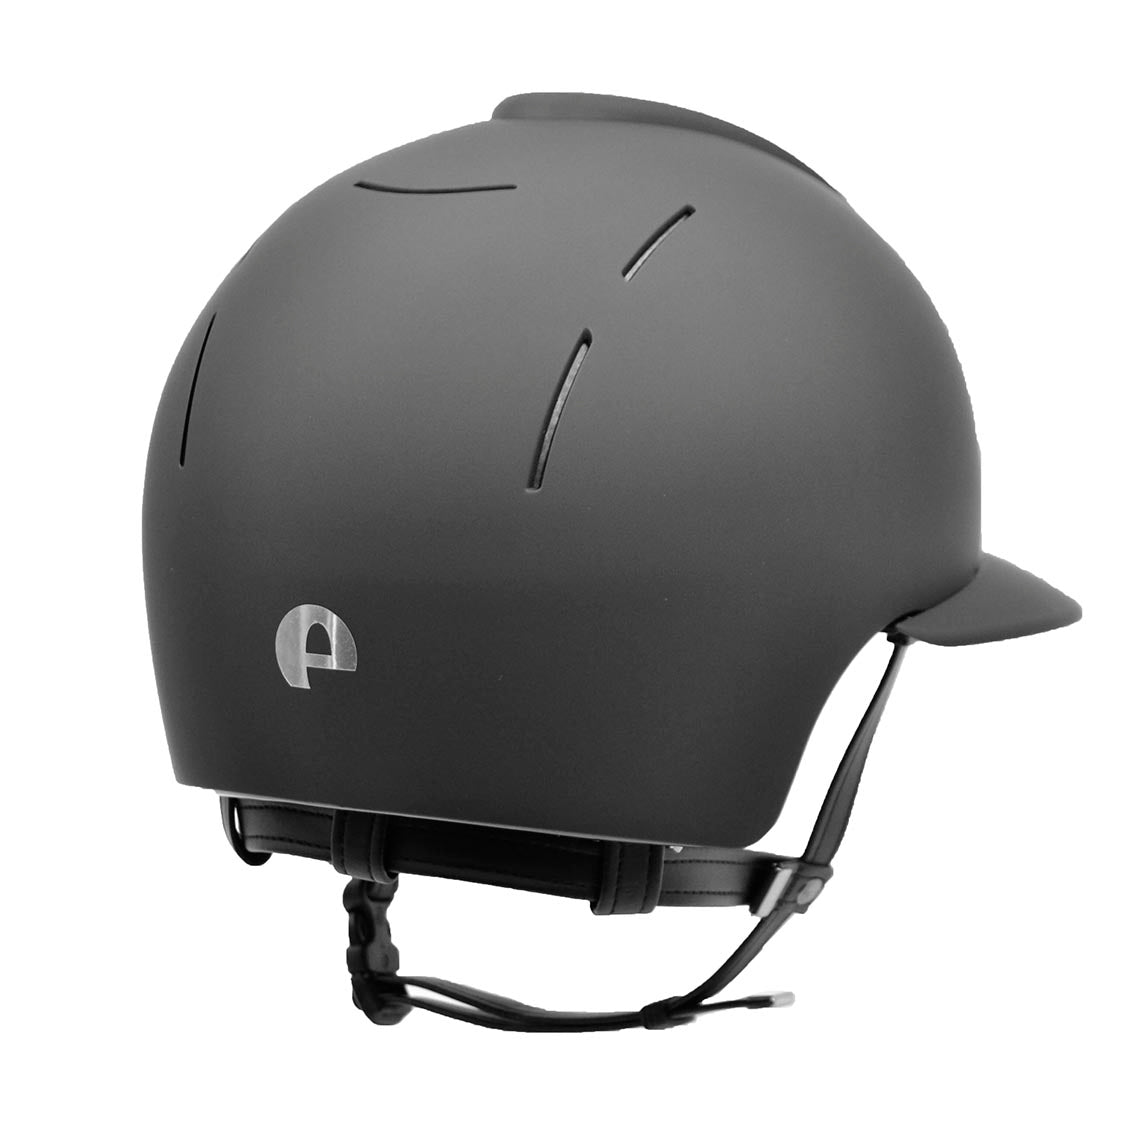 Kep Italia Smart black with polo visor